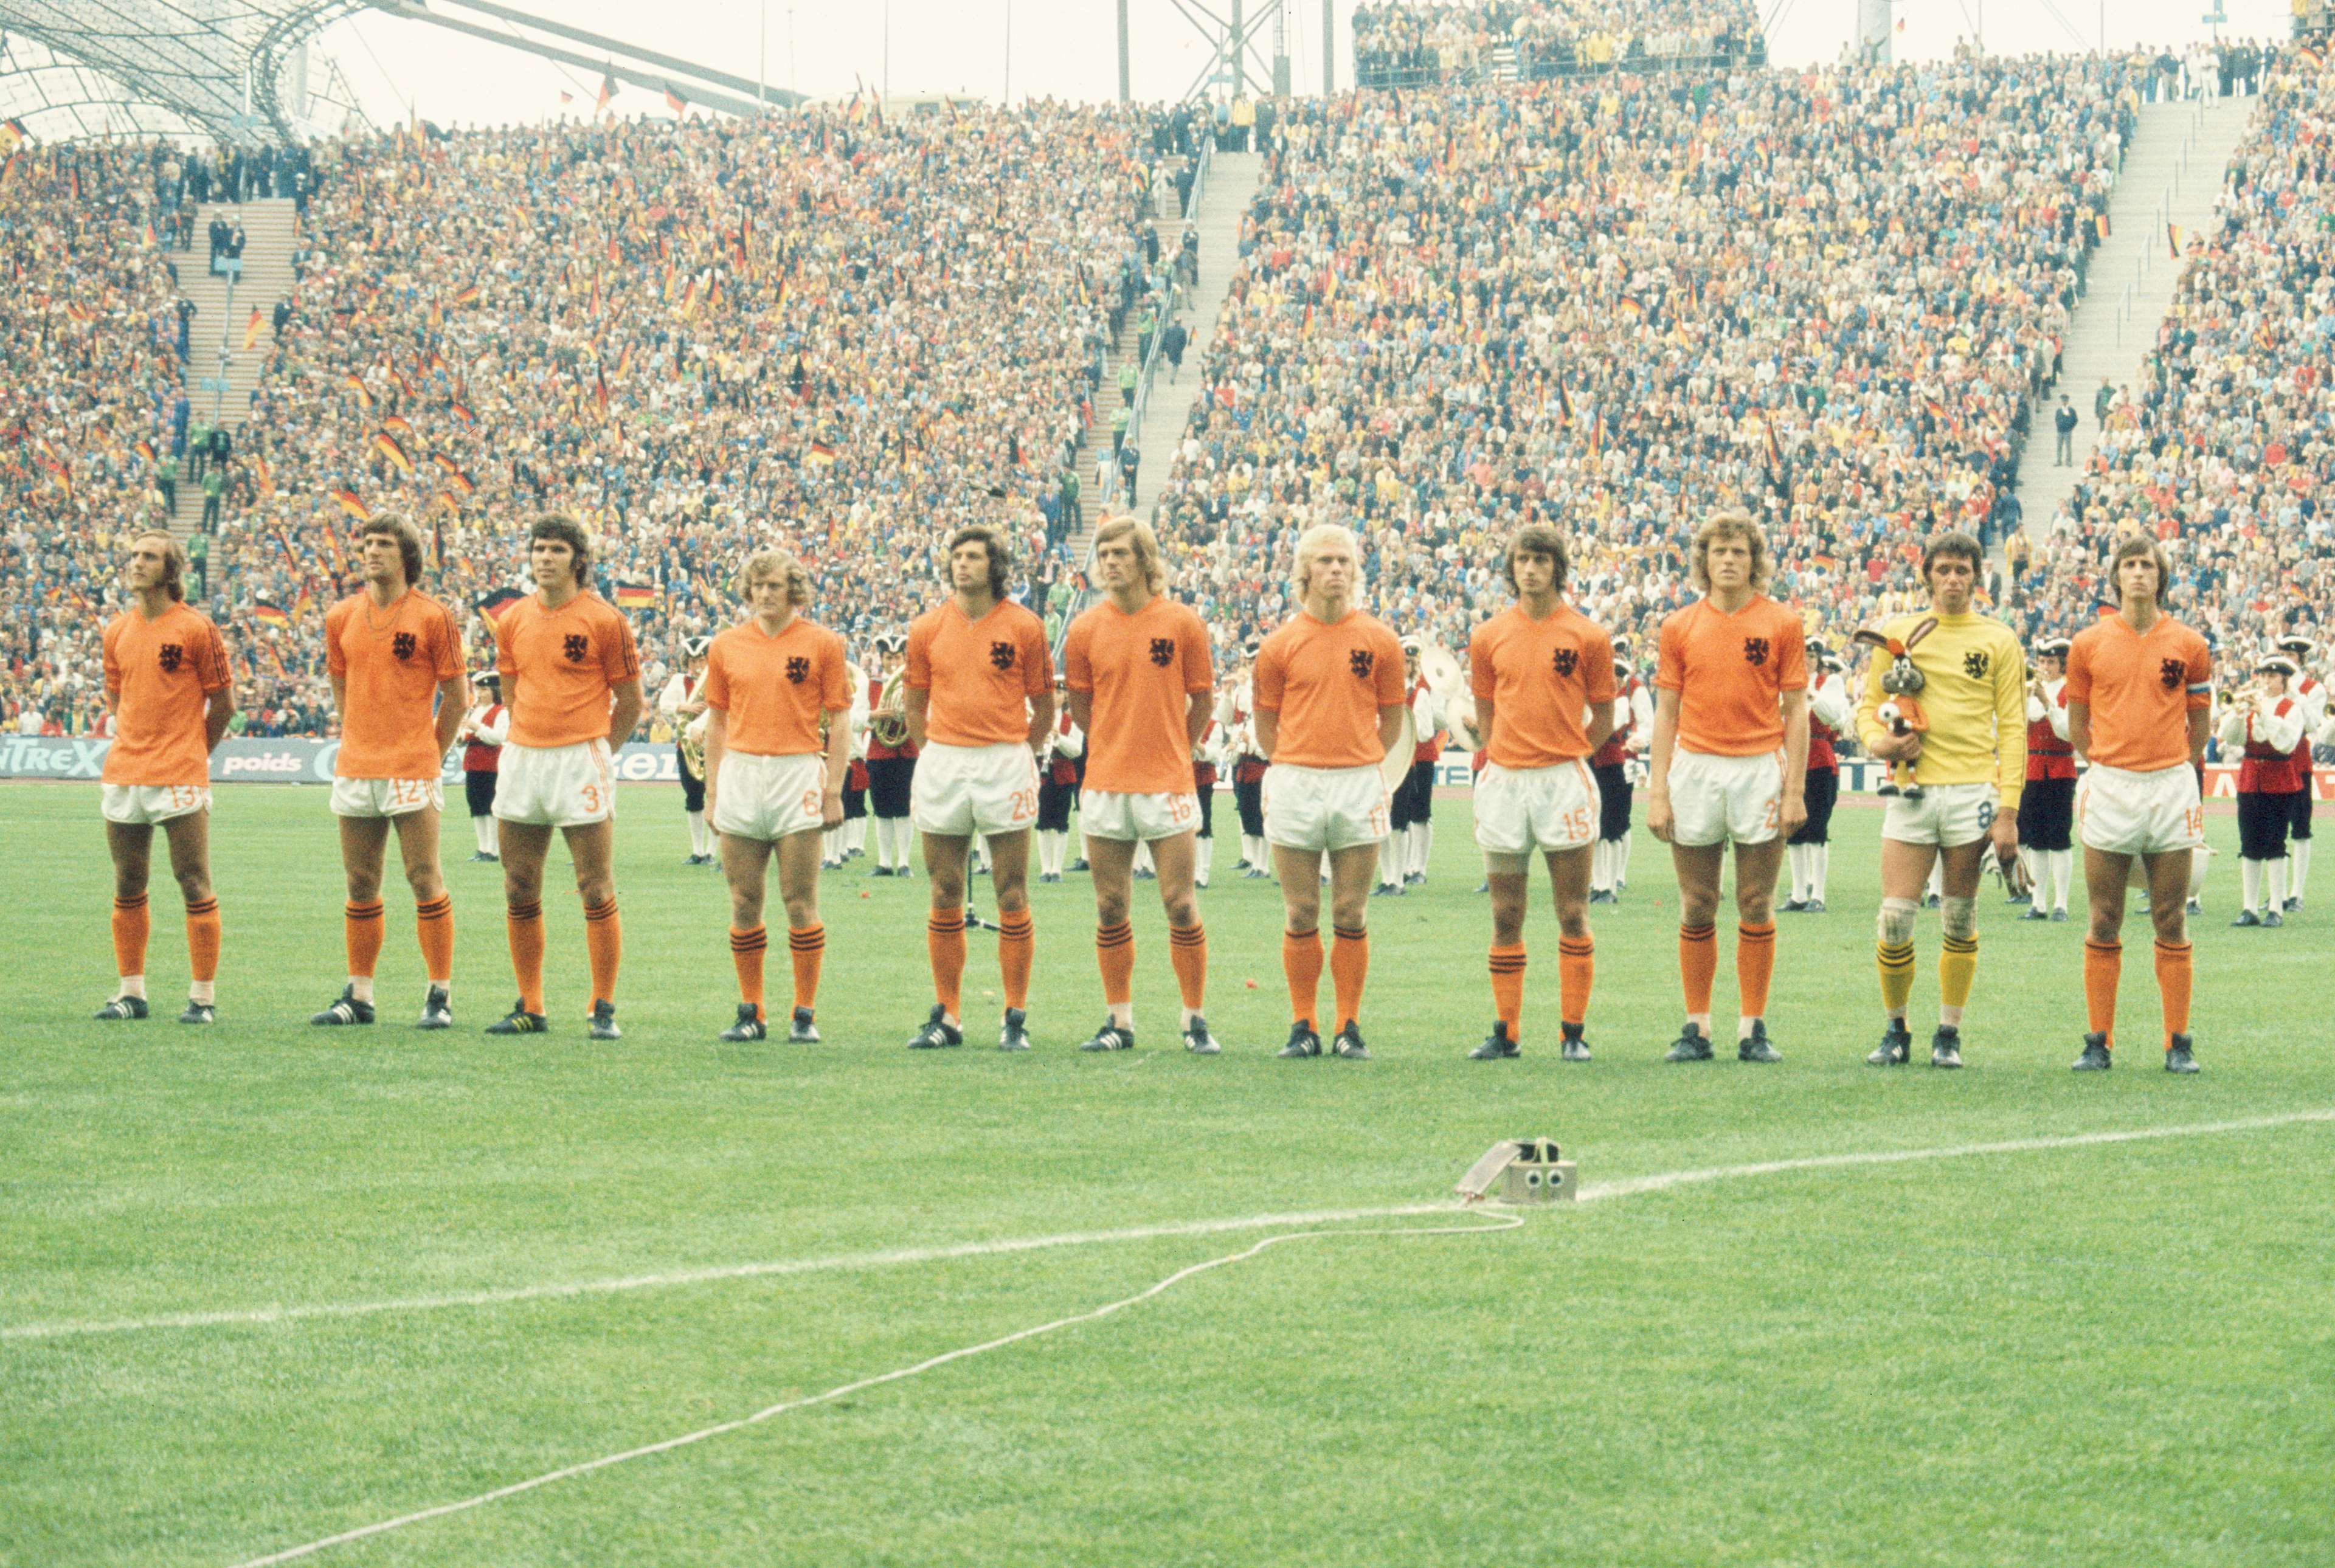 Netherlands 1974 World Cup